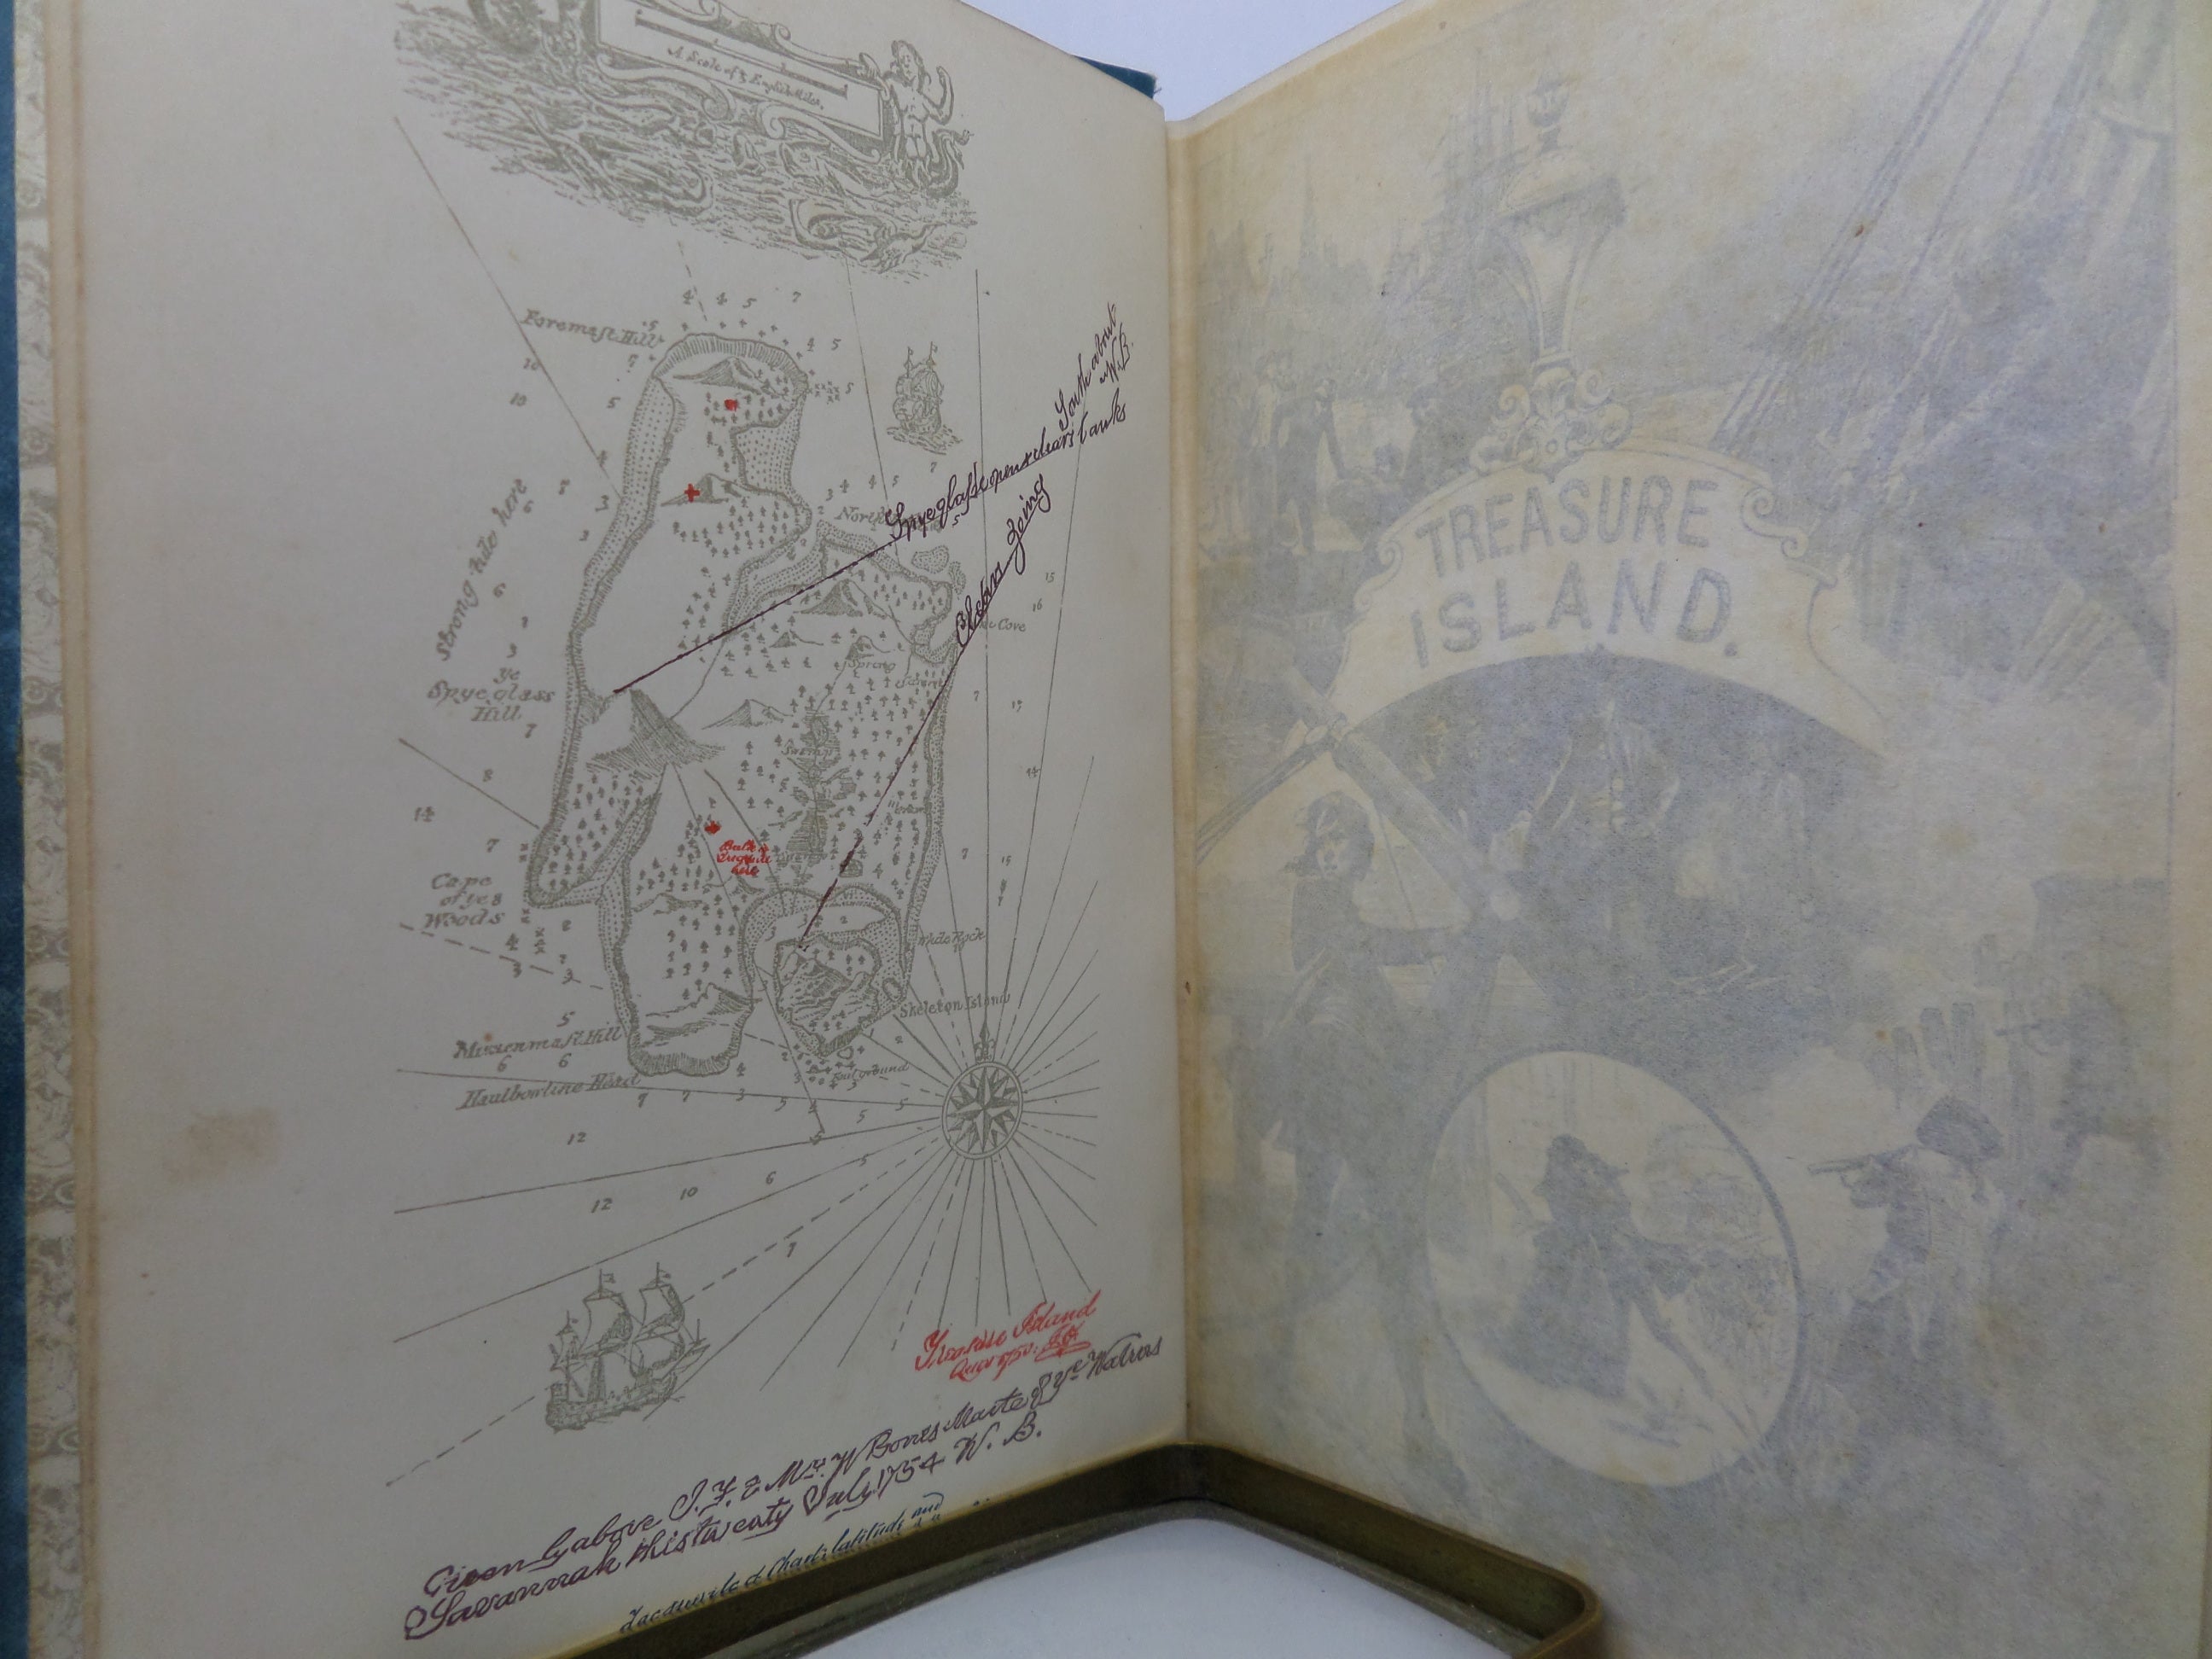 TREASURE ISLAND BY ROBERT LOUIS STEVENSON 1896 ILLUSTRATED EDITION